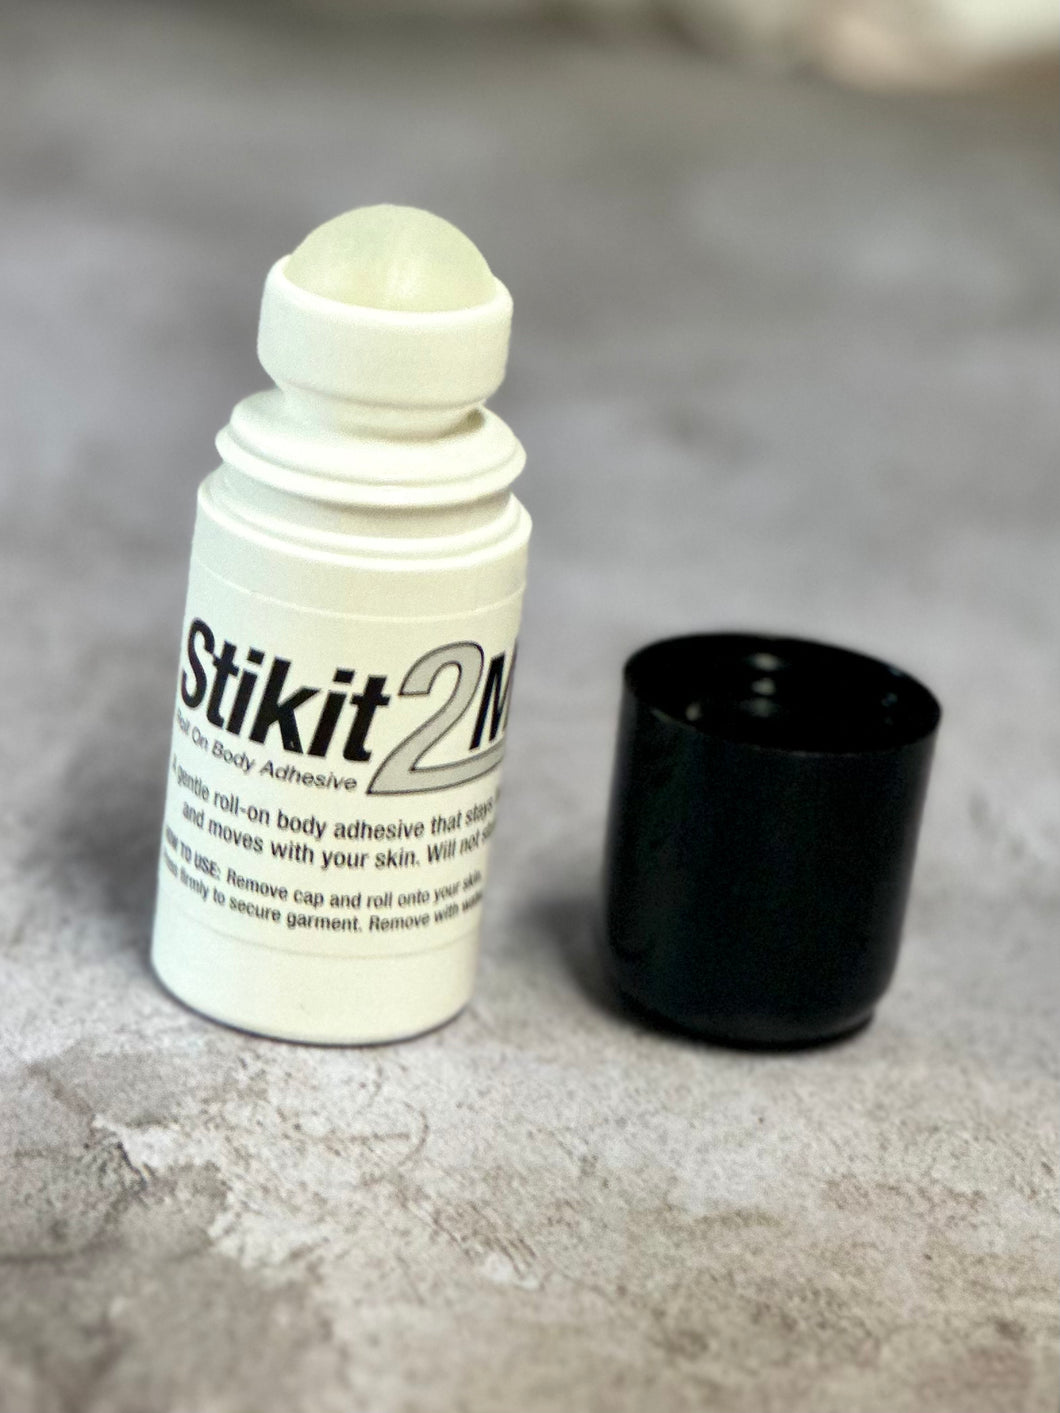 Stikit2me Roll on Body Glue